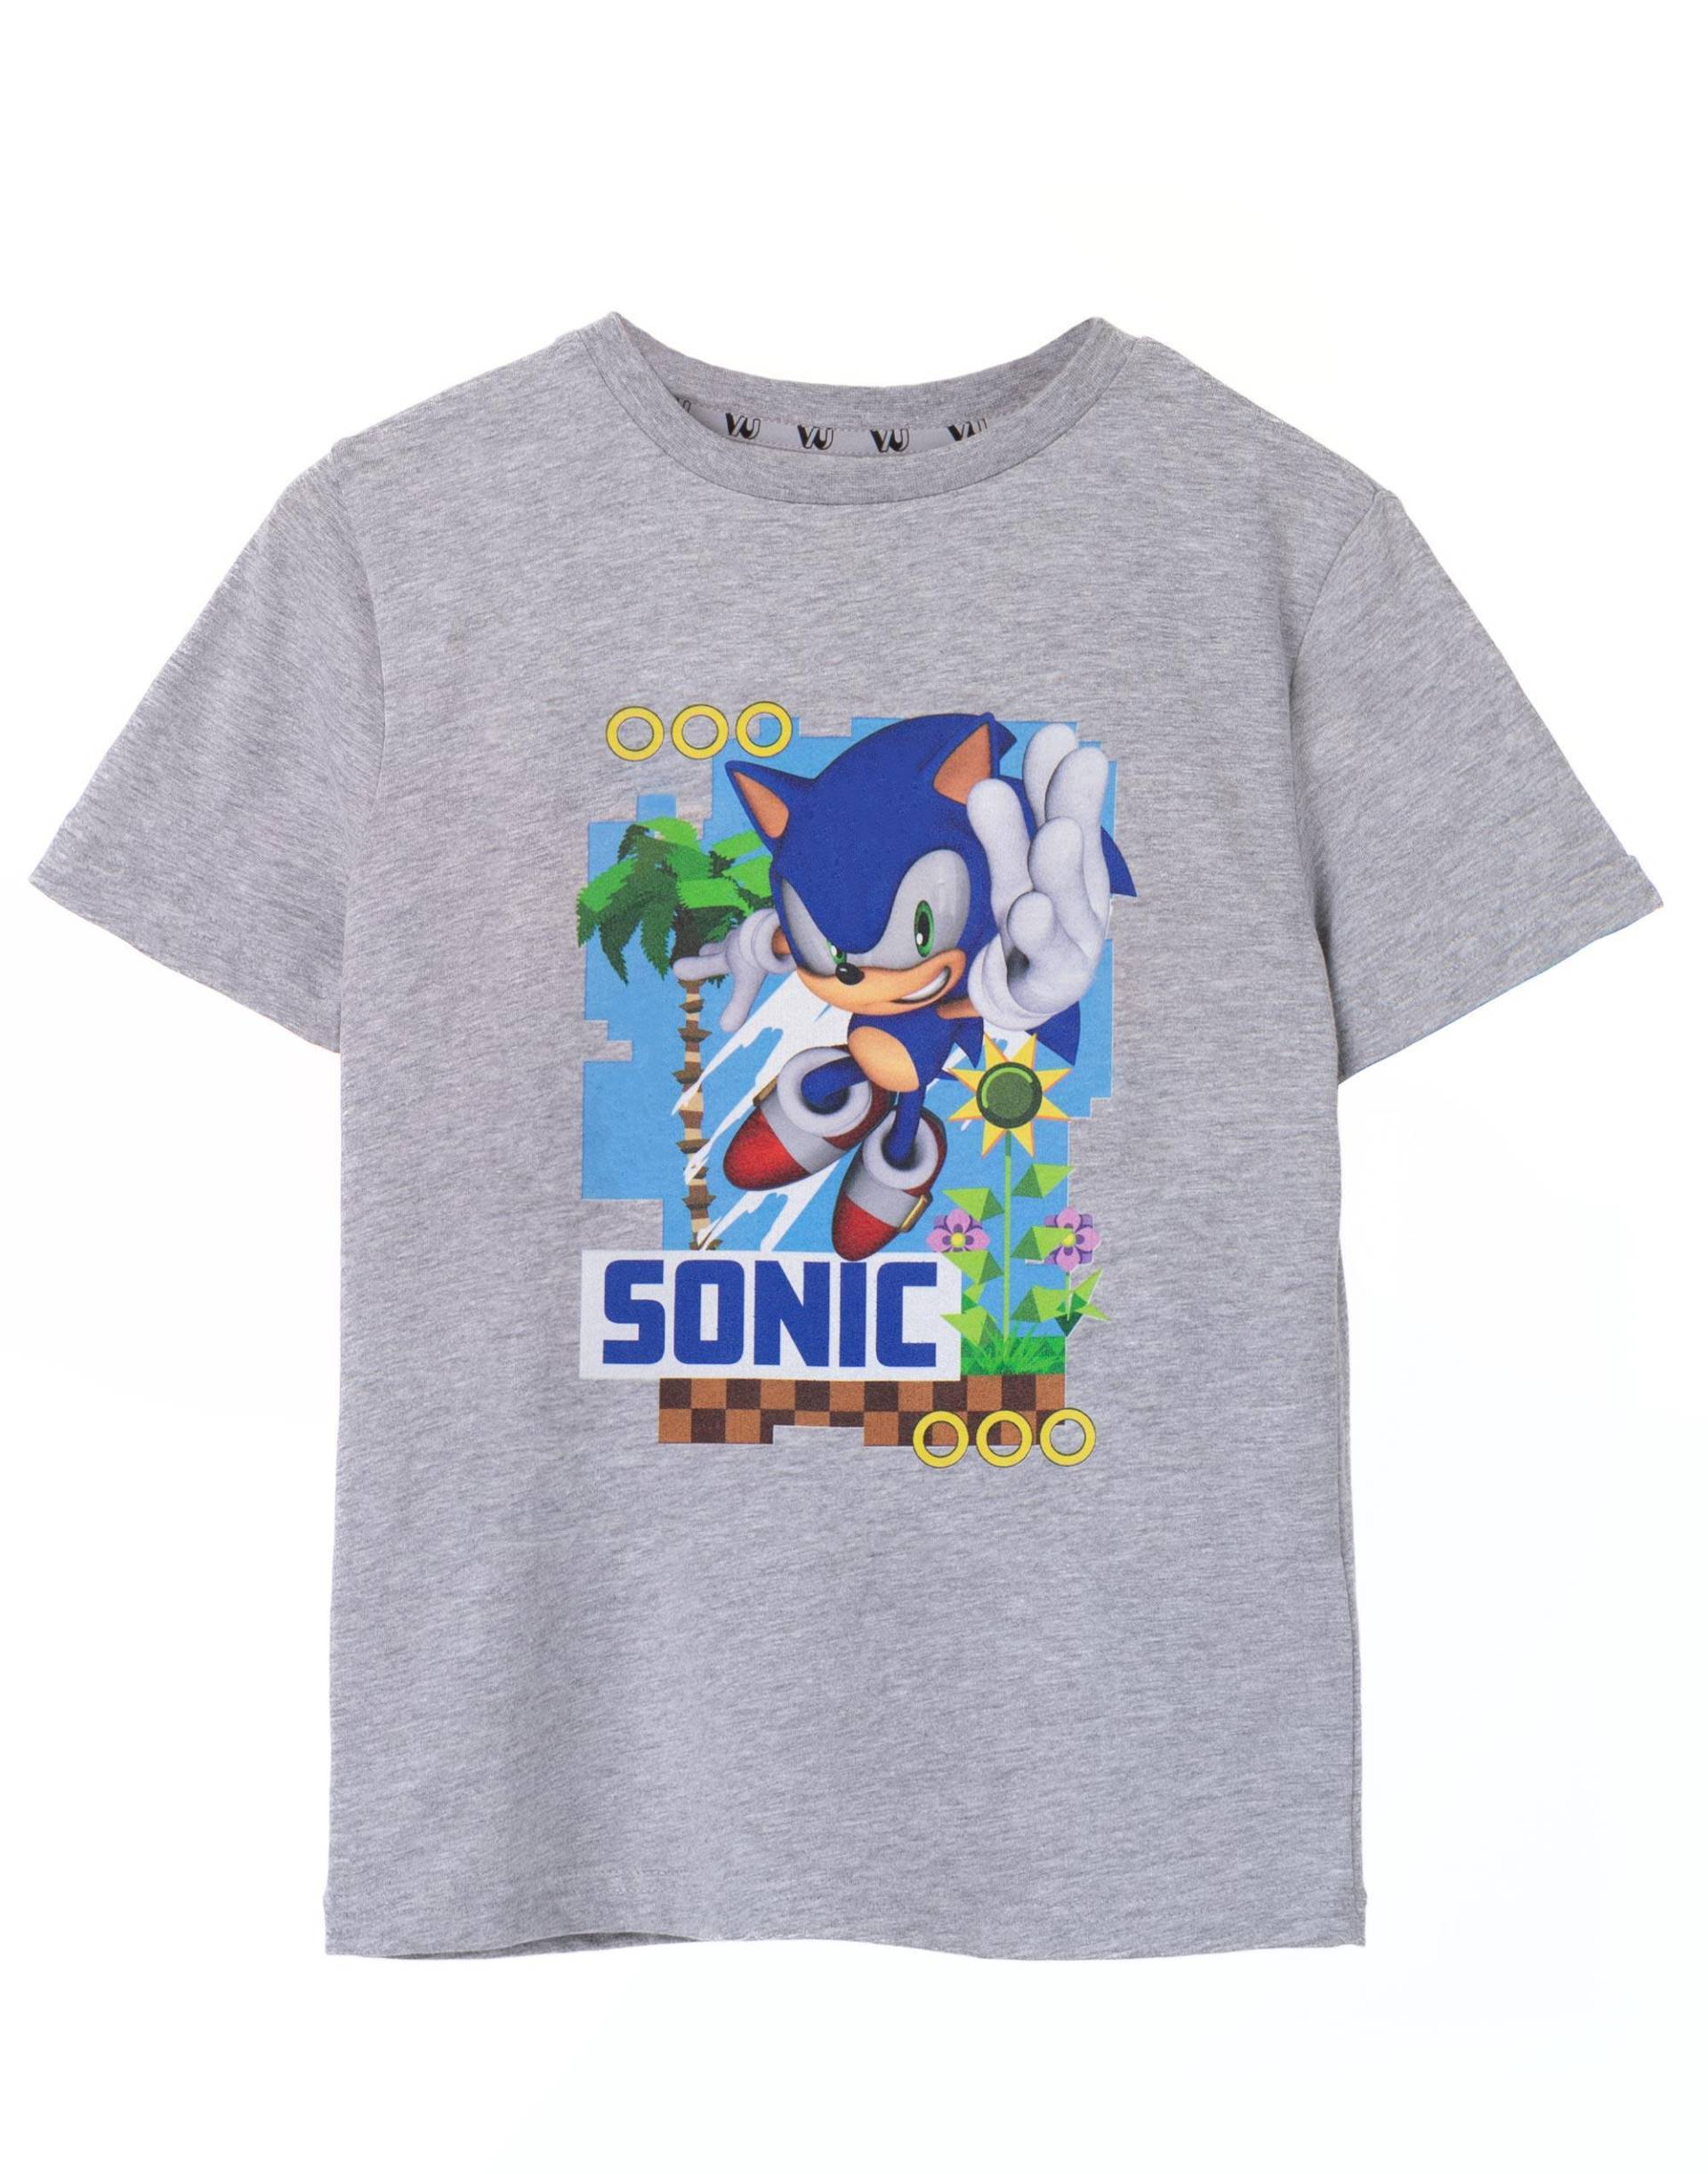 Tshirt Mädchen Taubengrau 116 von Sonic The Hedgehog